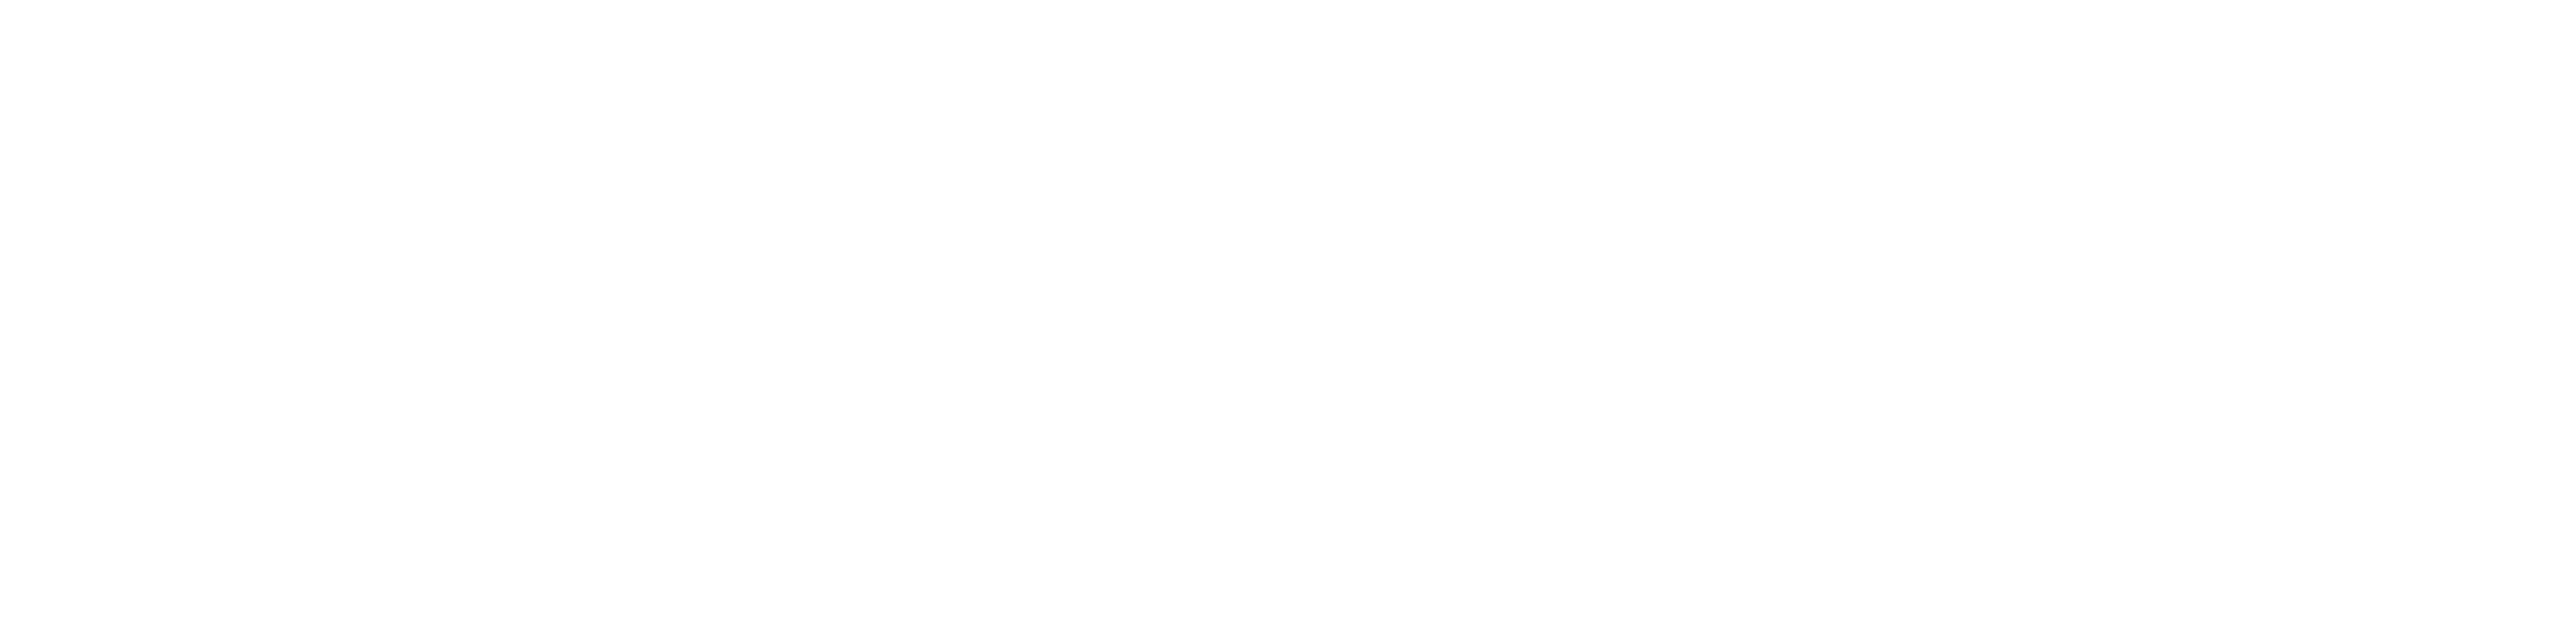 Name and Logo White